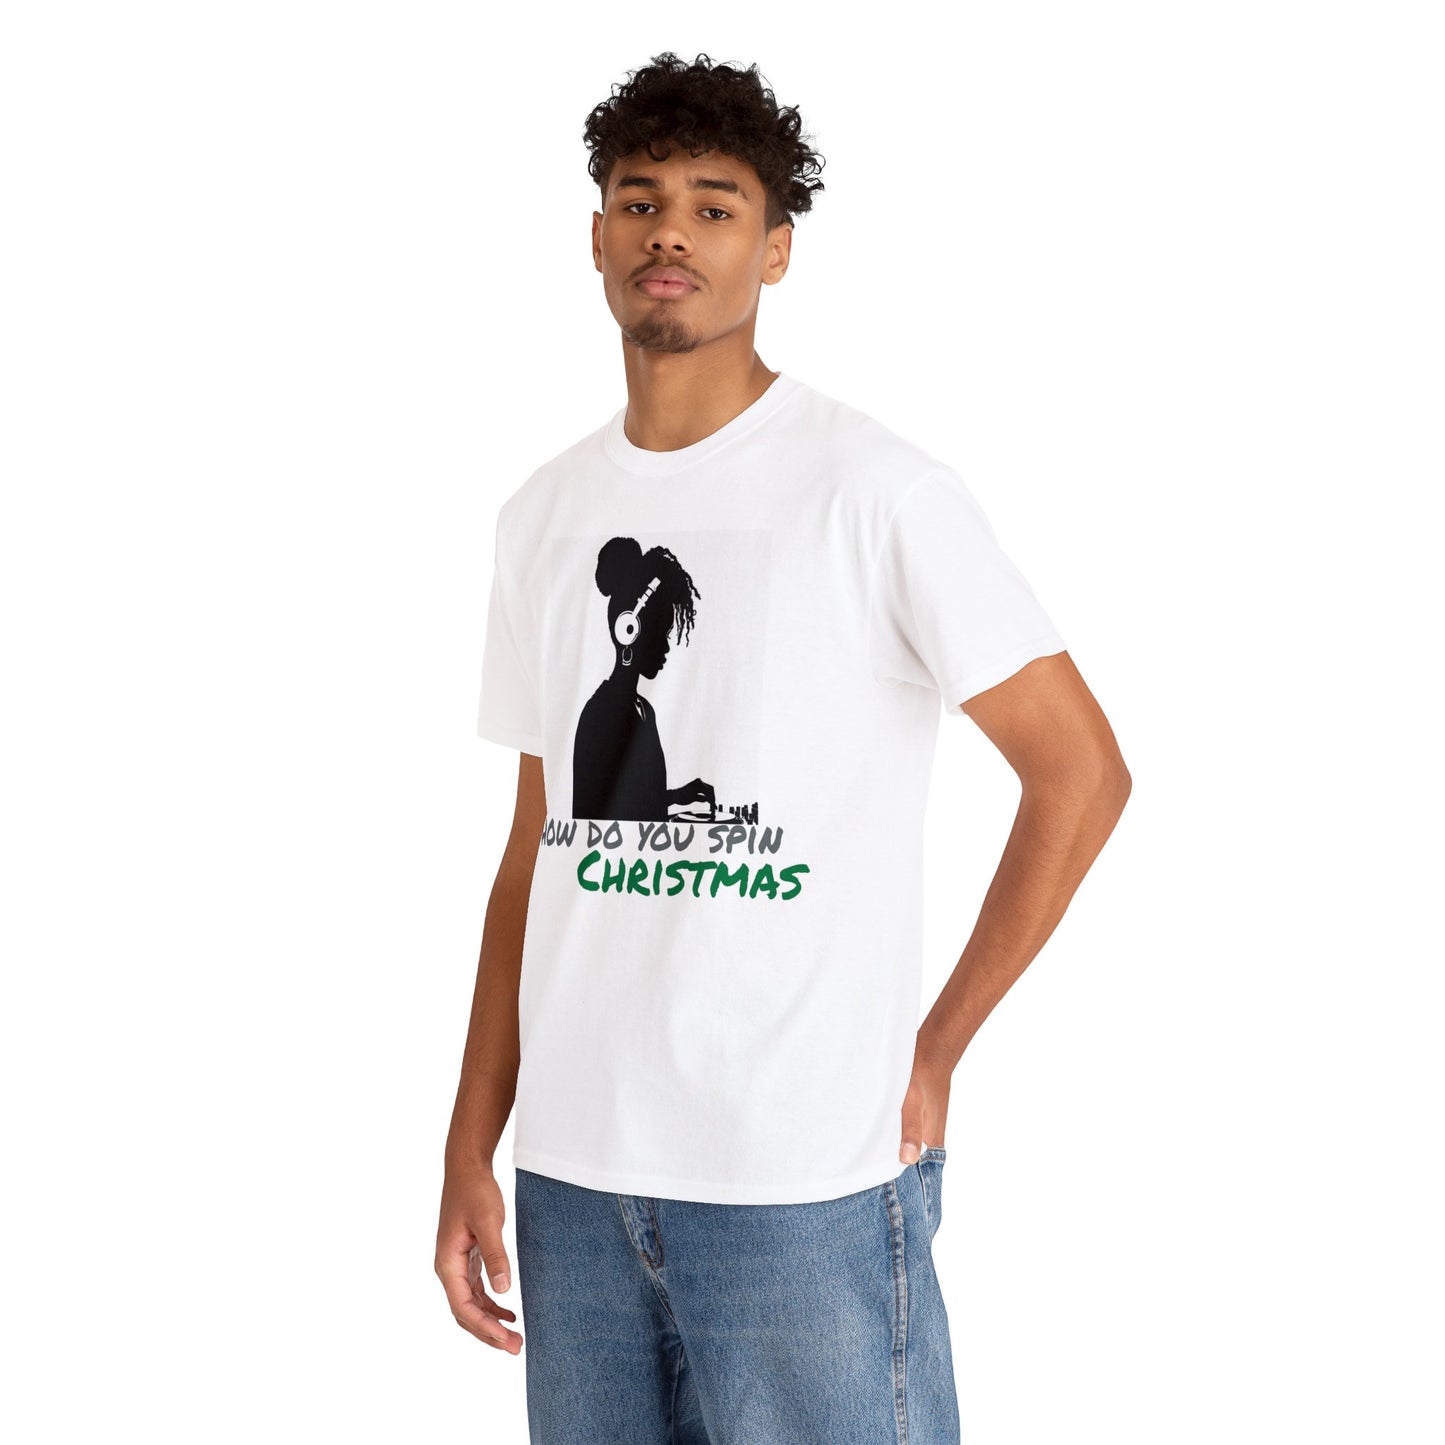 Smoov "How do you spin Christmas" Unisex Heavy Cotton T-Shirt